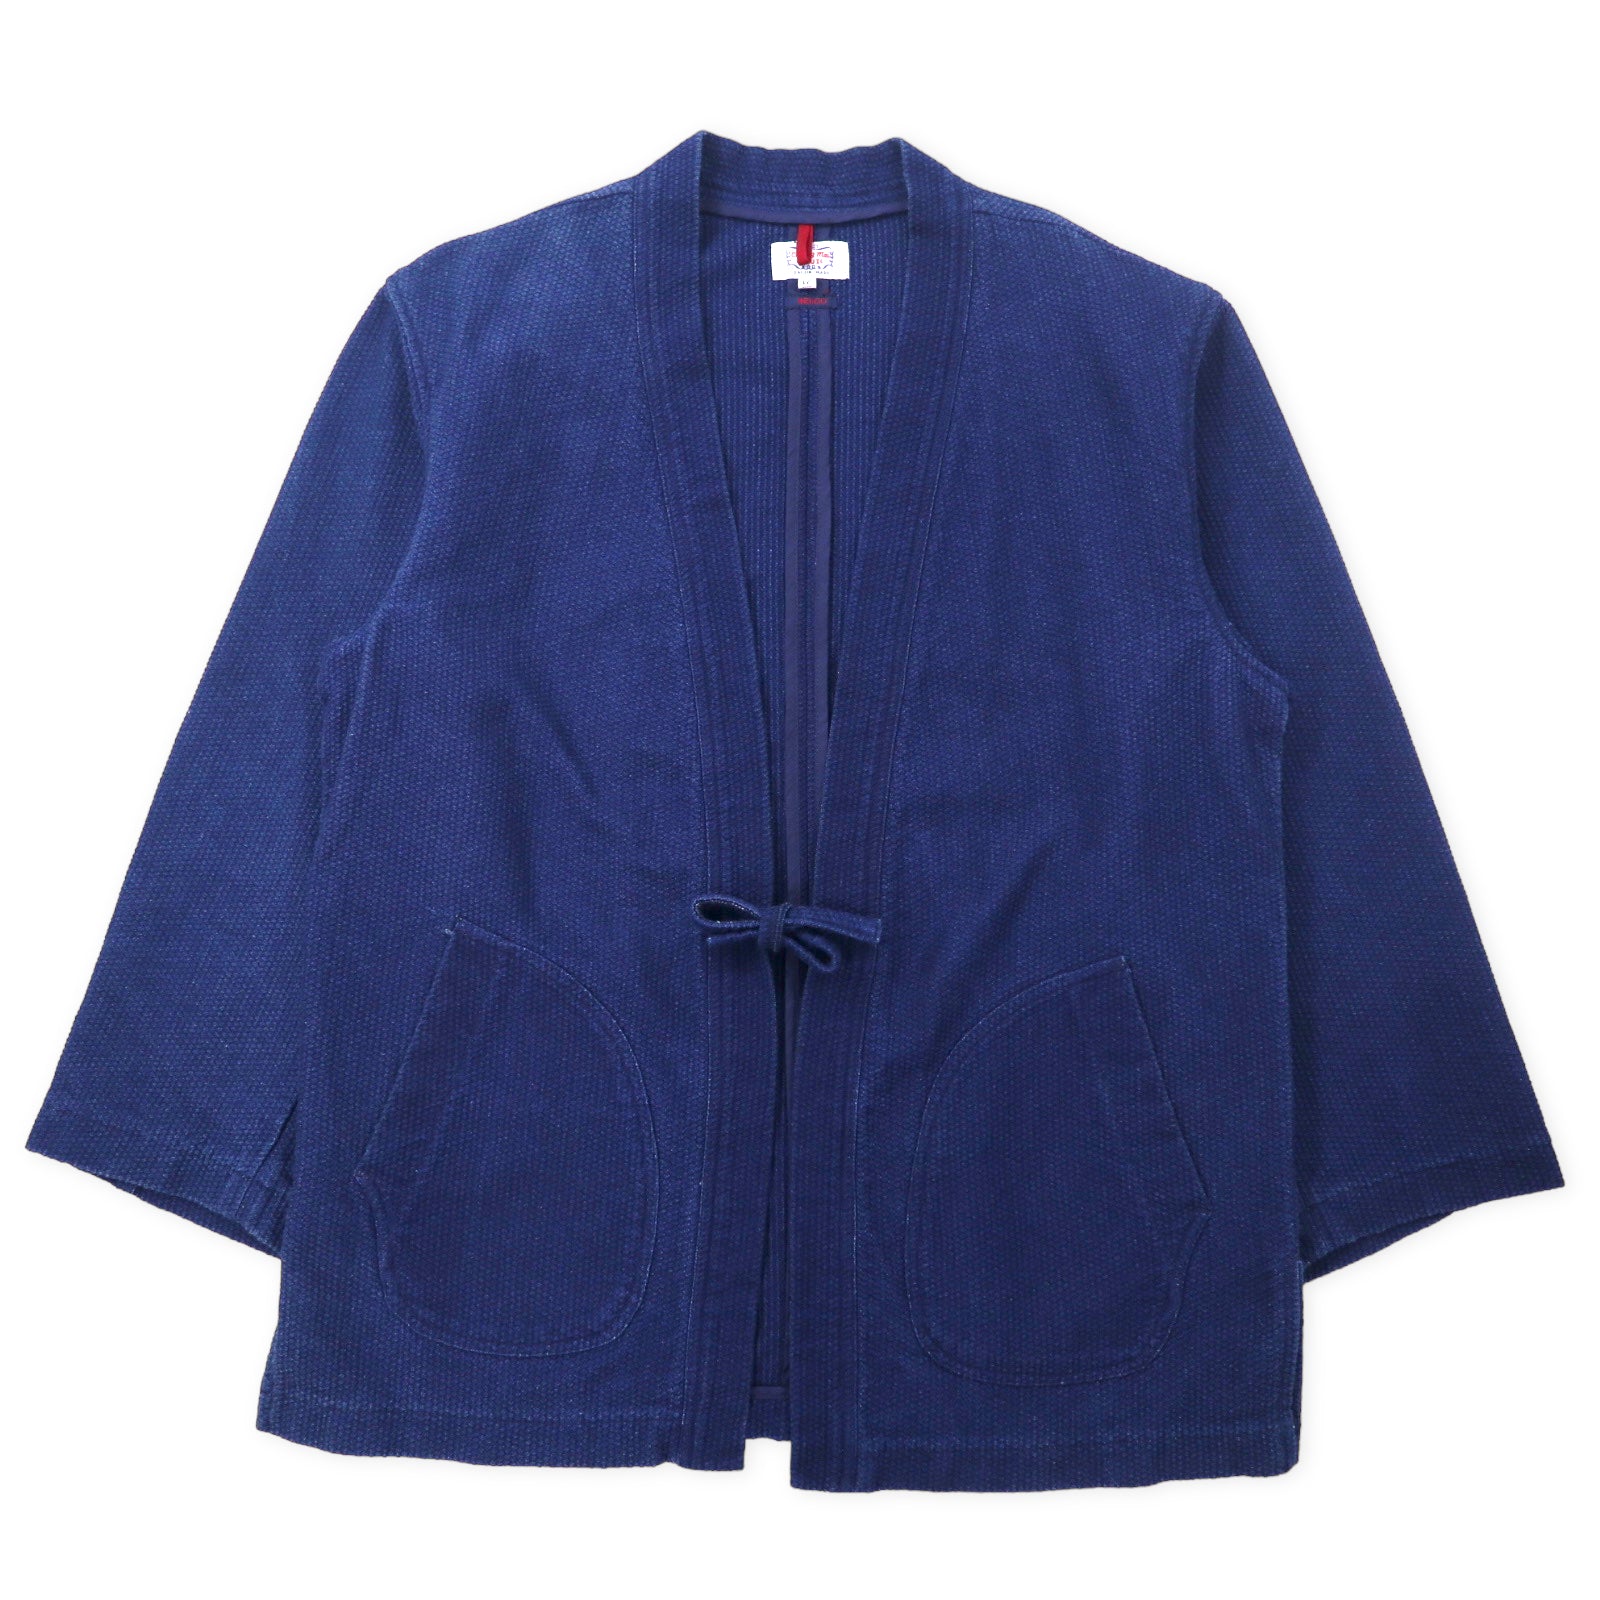 GAIJIN MADE Gown Jacket Haori Jacket XL Blue Cotton Indigo Dobby